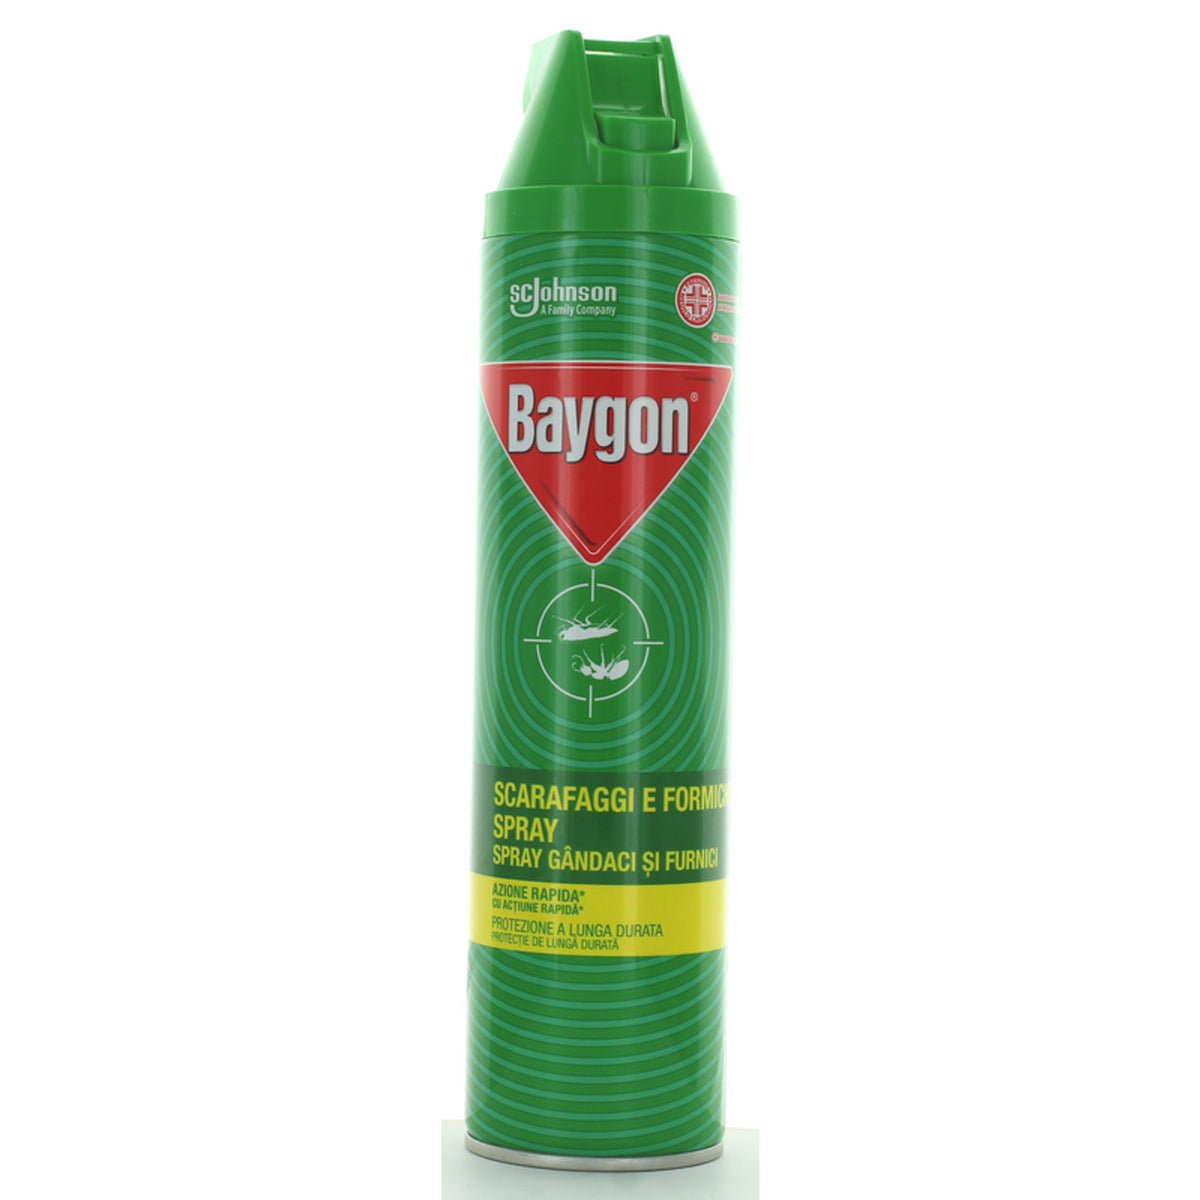 Baygon Green Insectide Spray karaluchy i mrówki 400 ml